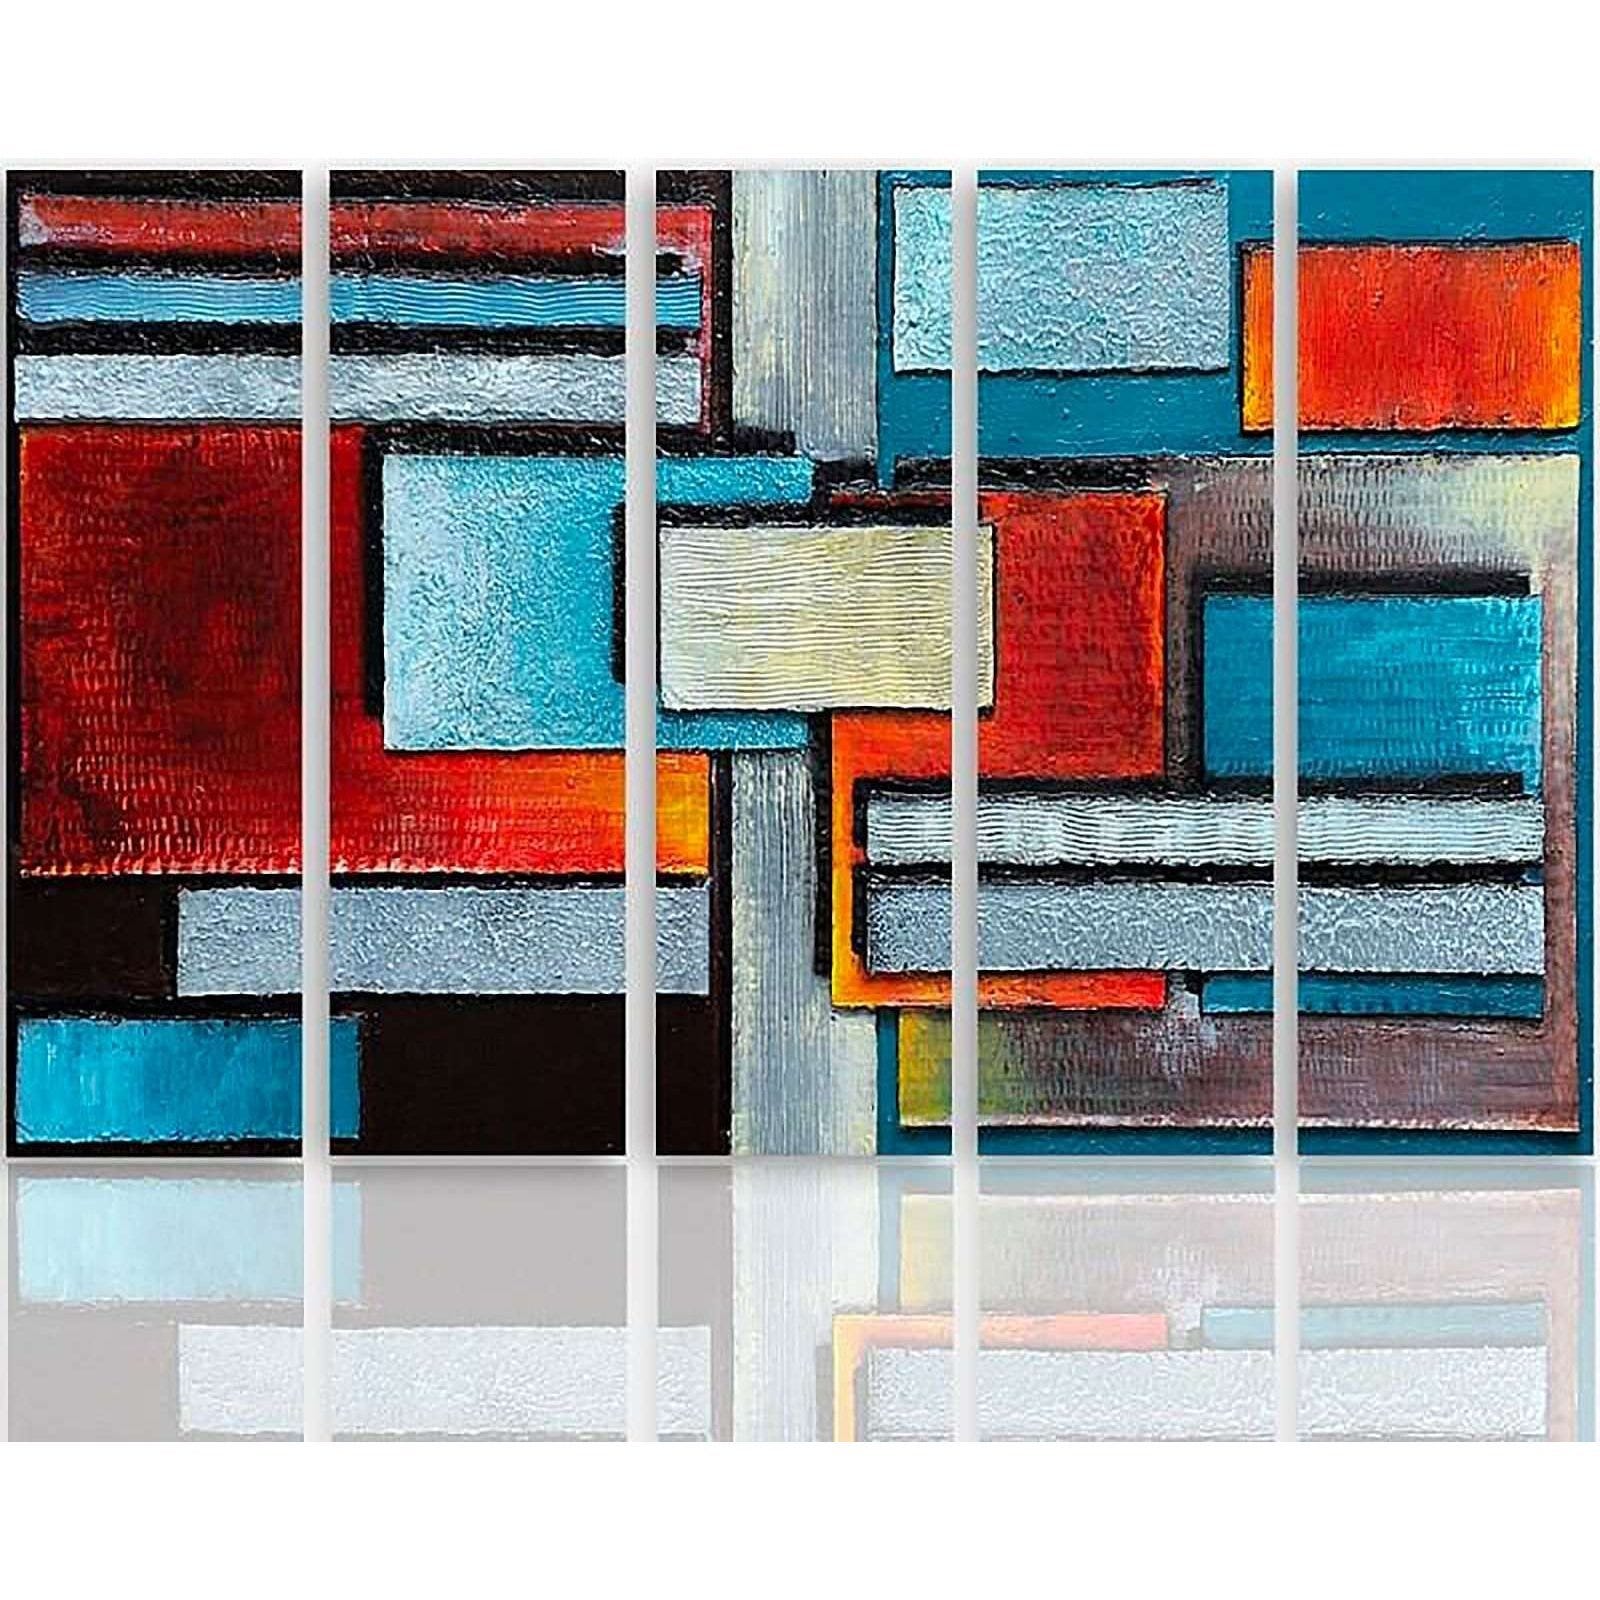 Tableau Design : Arbre de vie multicolore, 100 x 100 cm